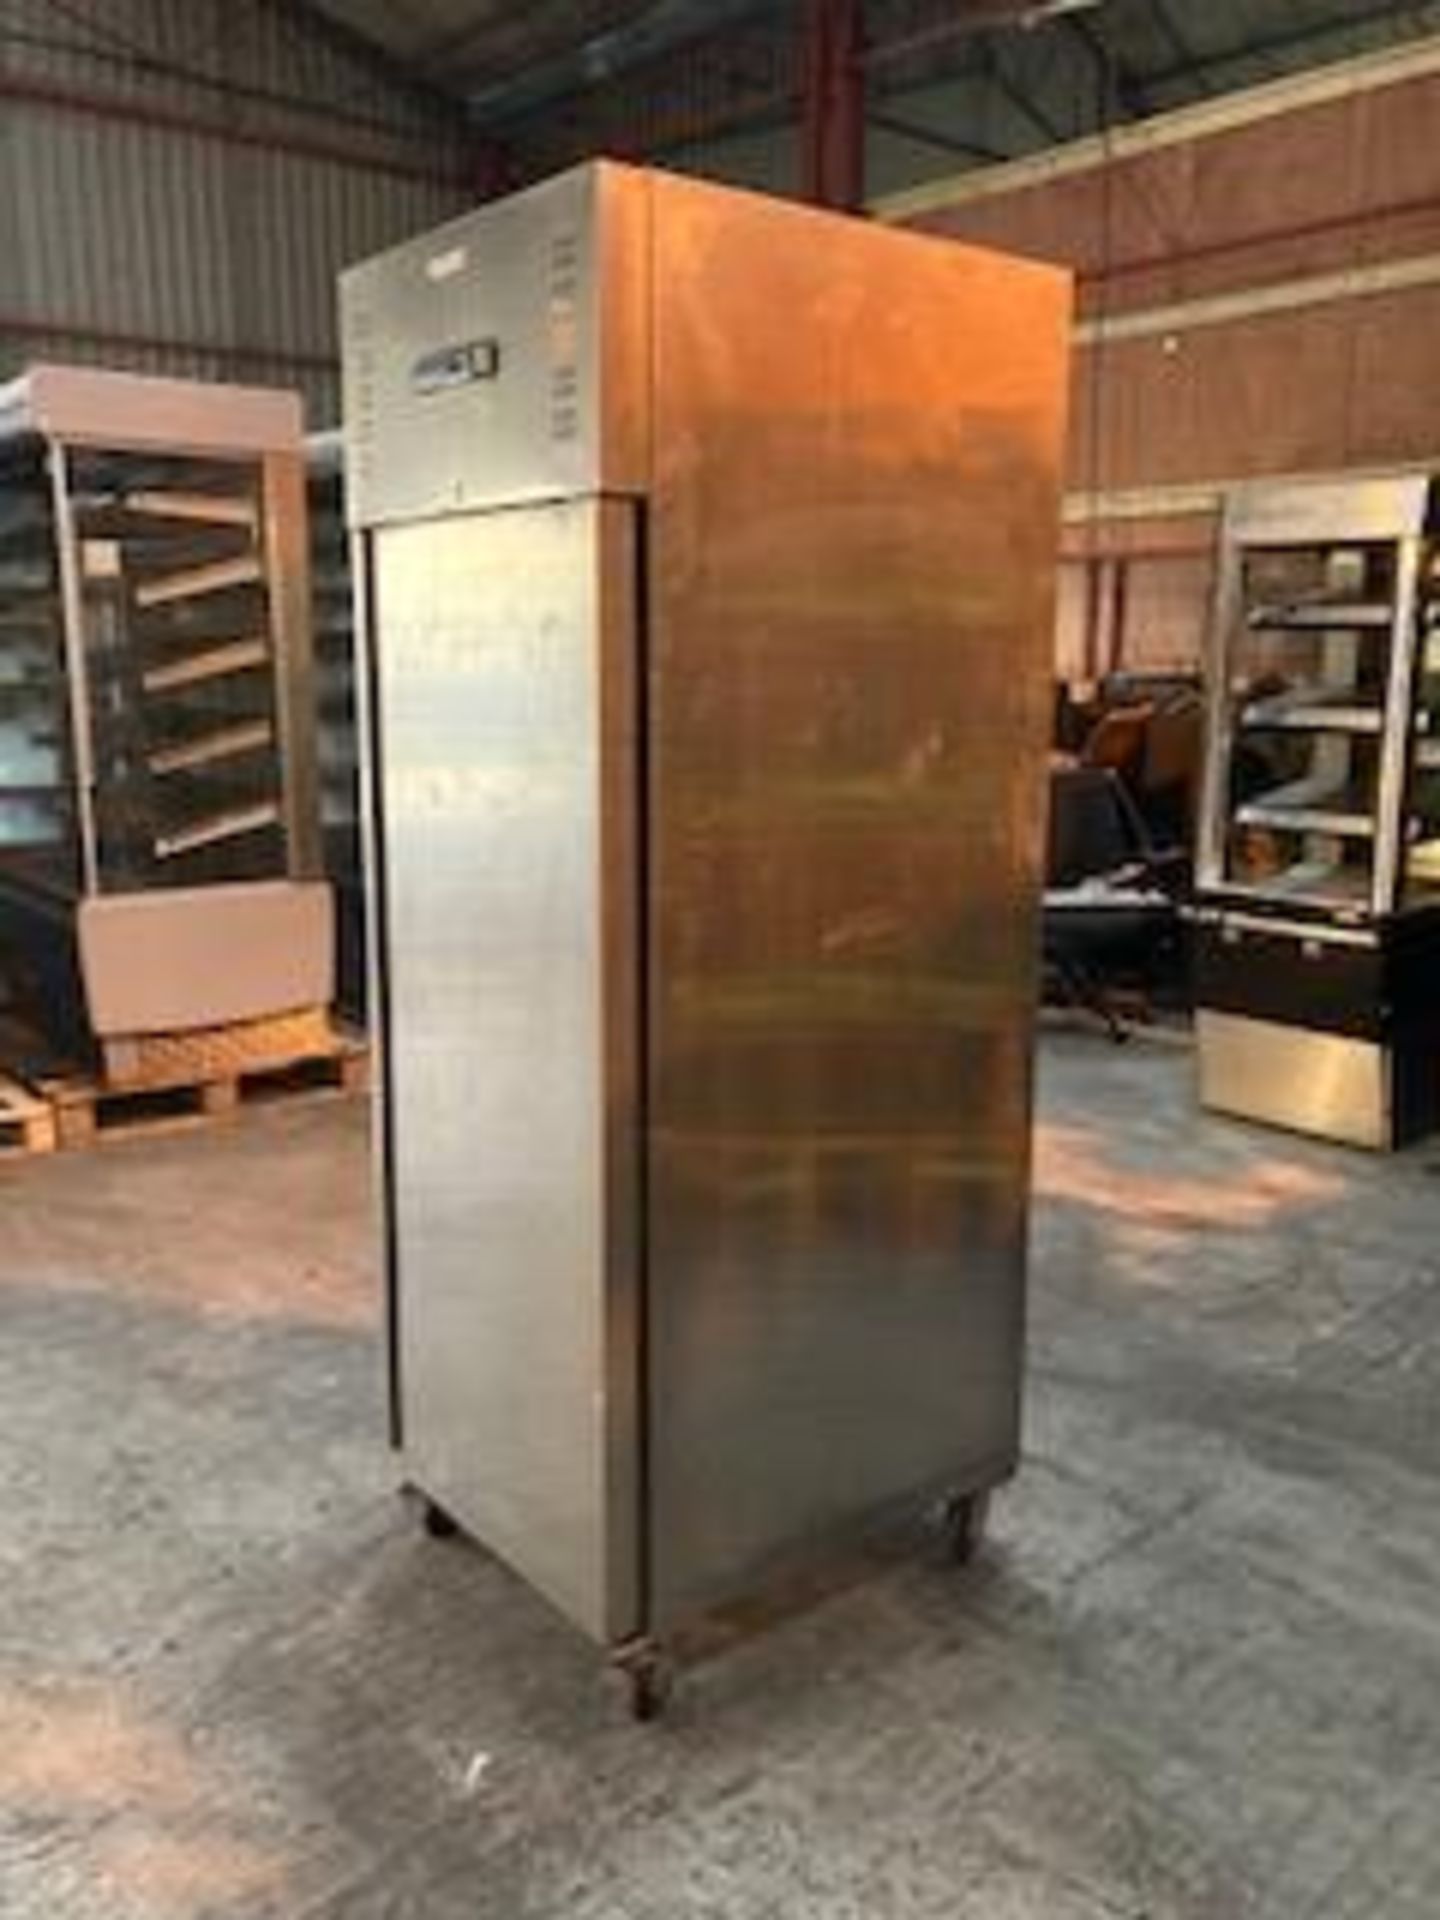 Polar G593 Single Door Upright Stainless Steel 600 Ltr Freezer - Image 2 of 5